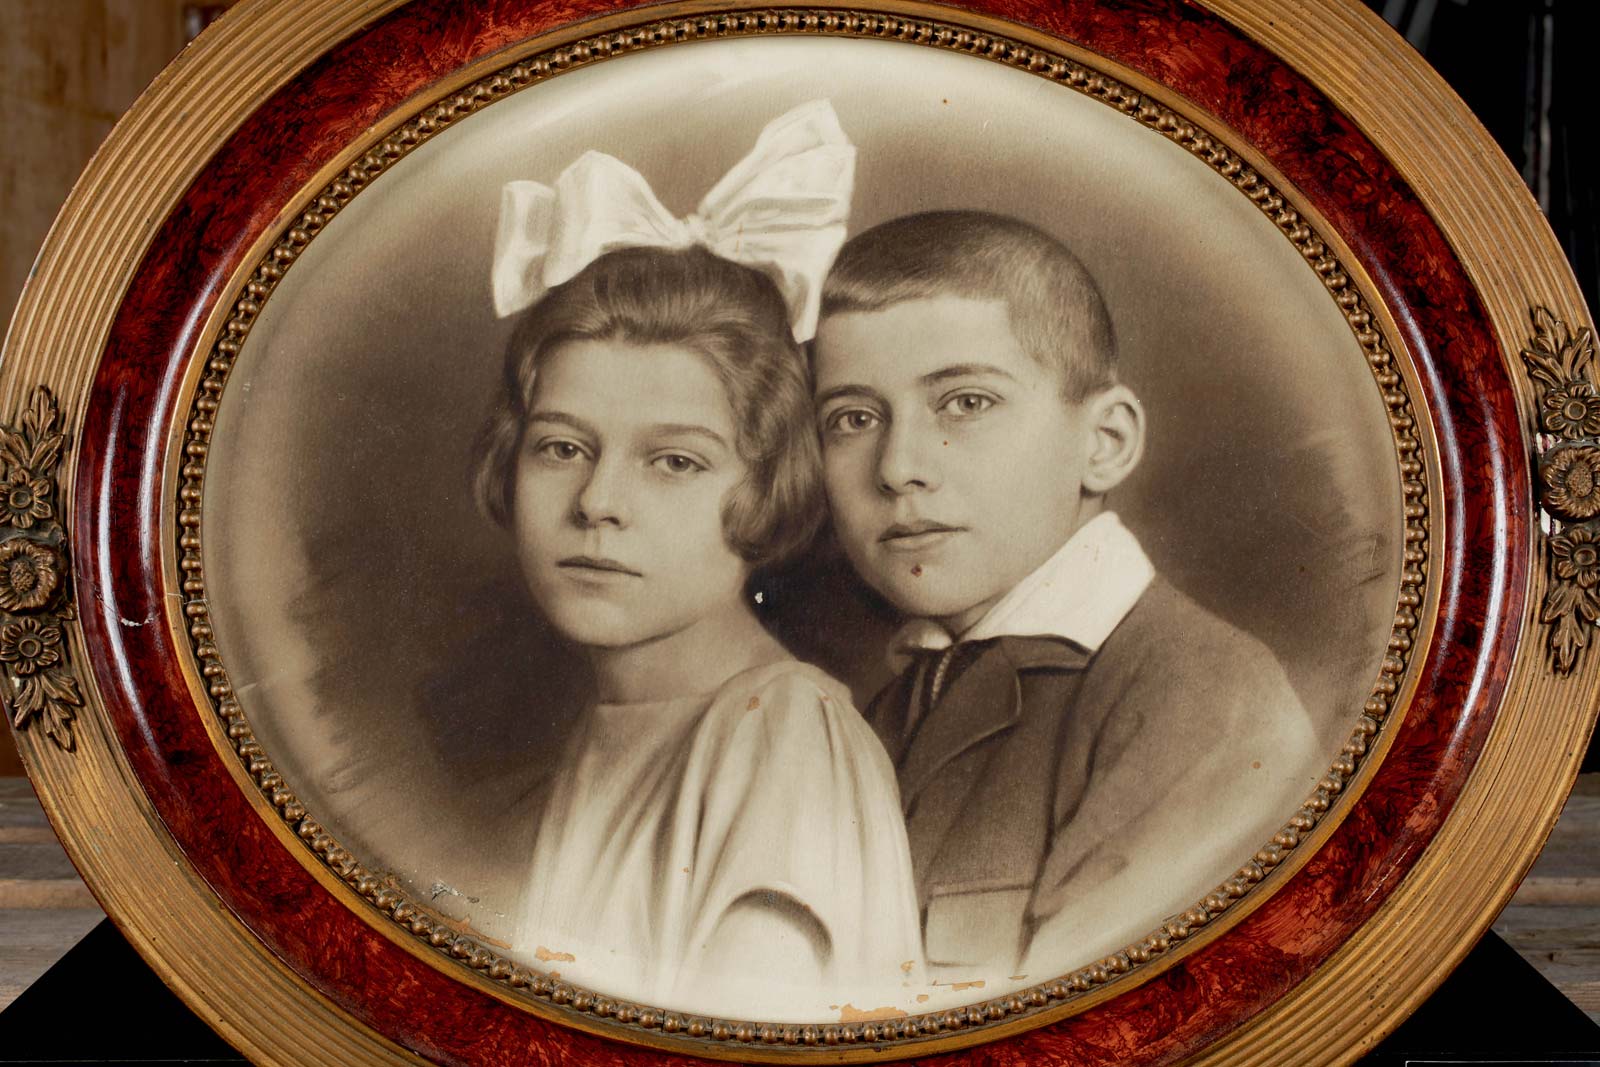 Saul and Lica, c. 1924